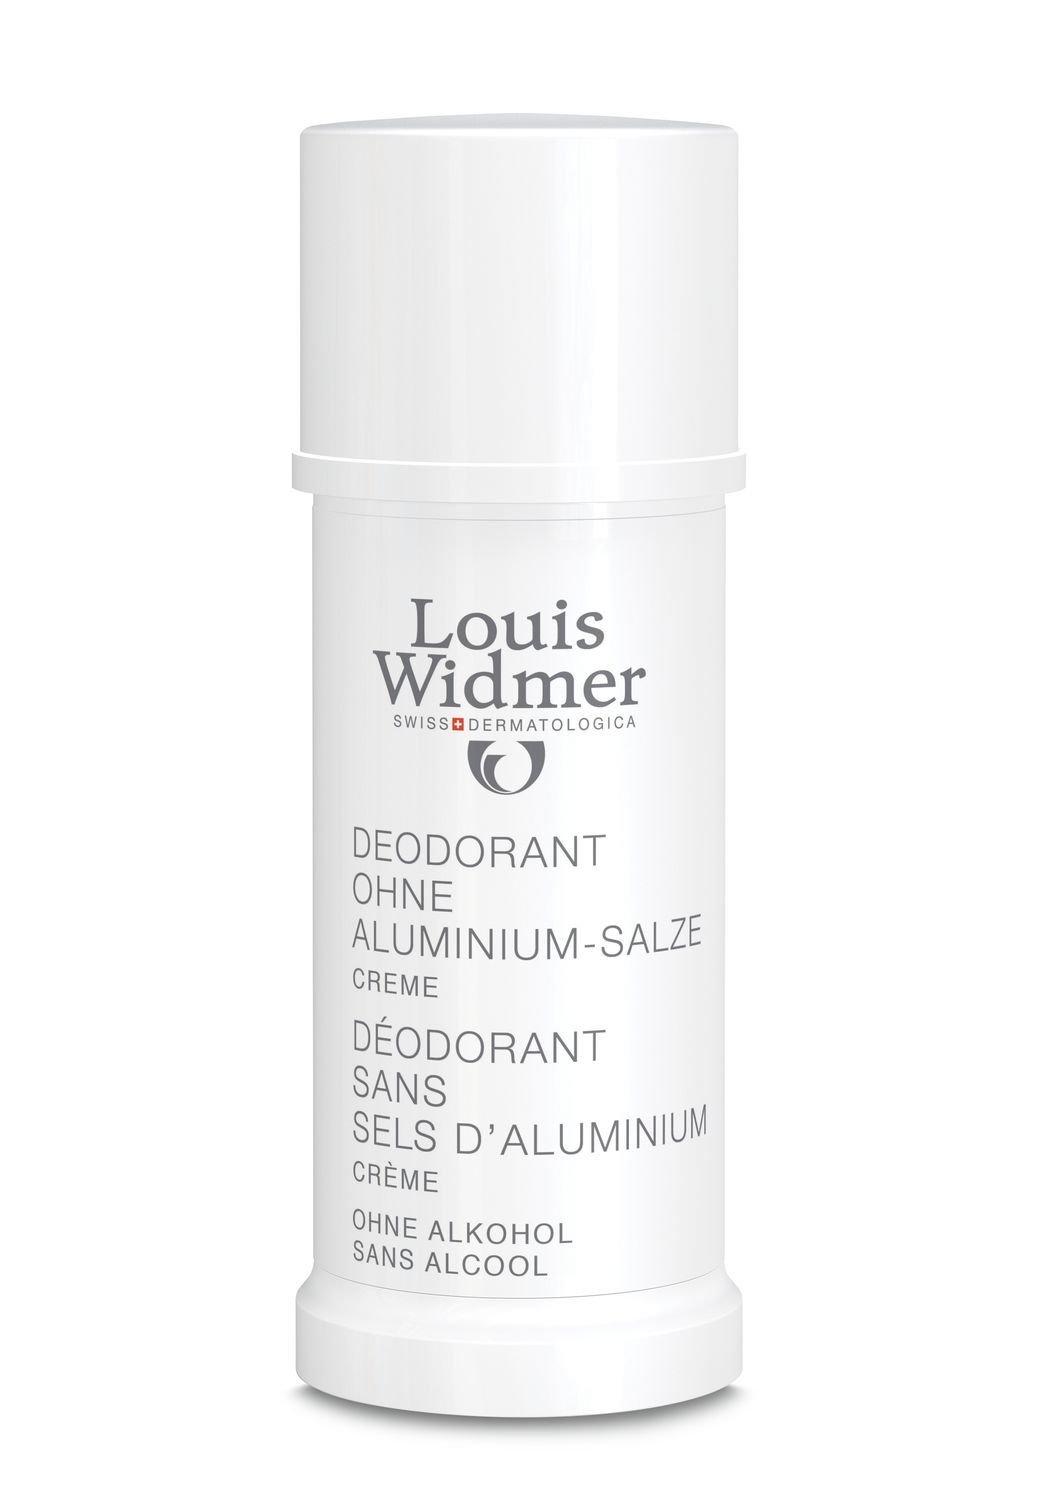 Image of Louis Widmer Deodorant Crème ohne Aluminum-Salze - 40ml